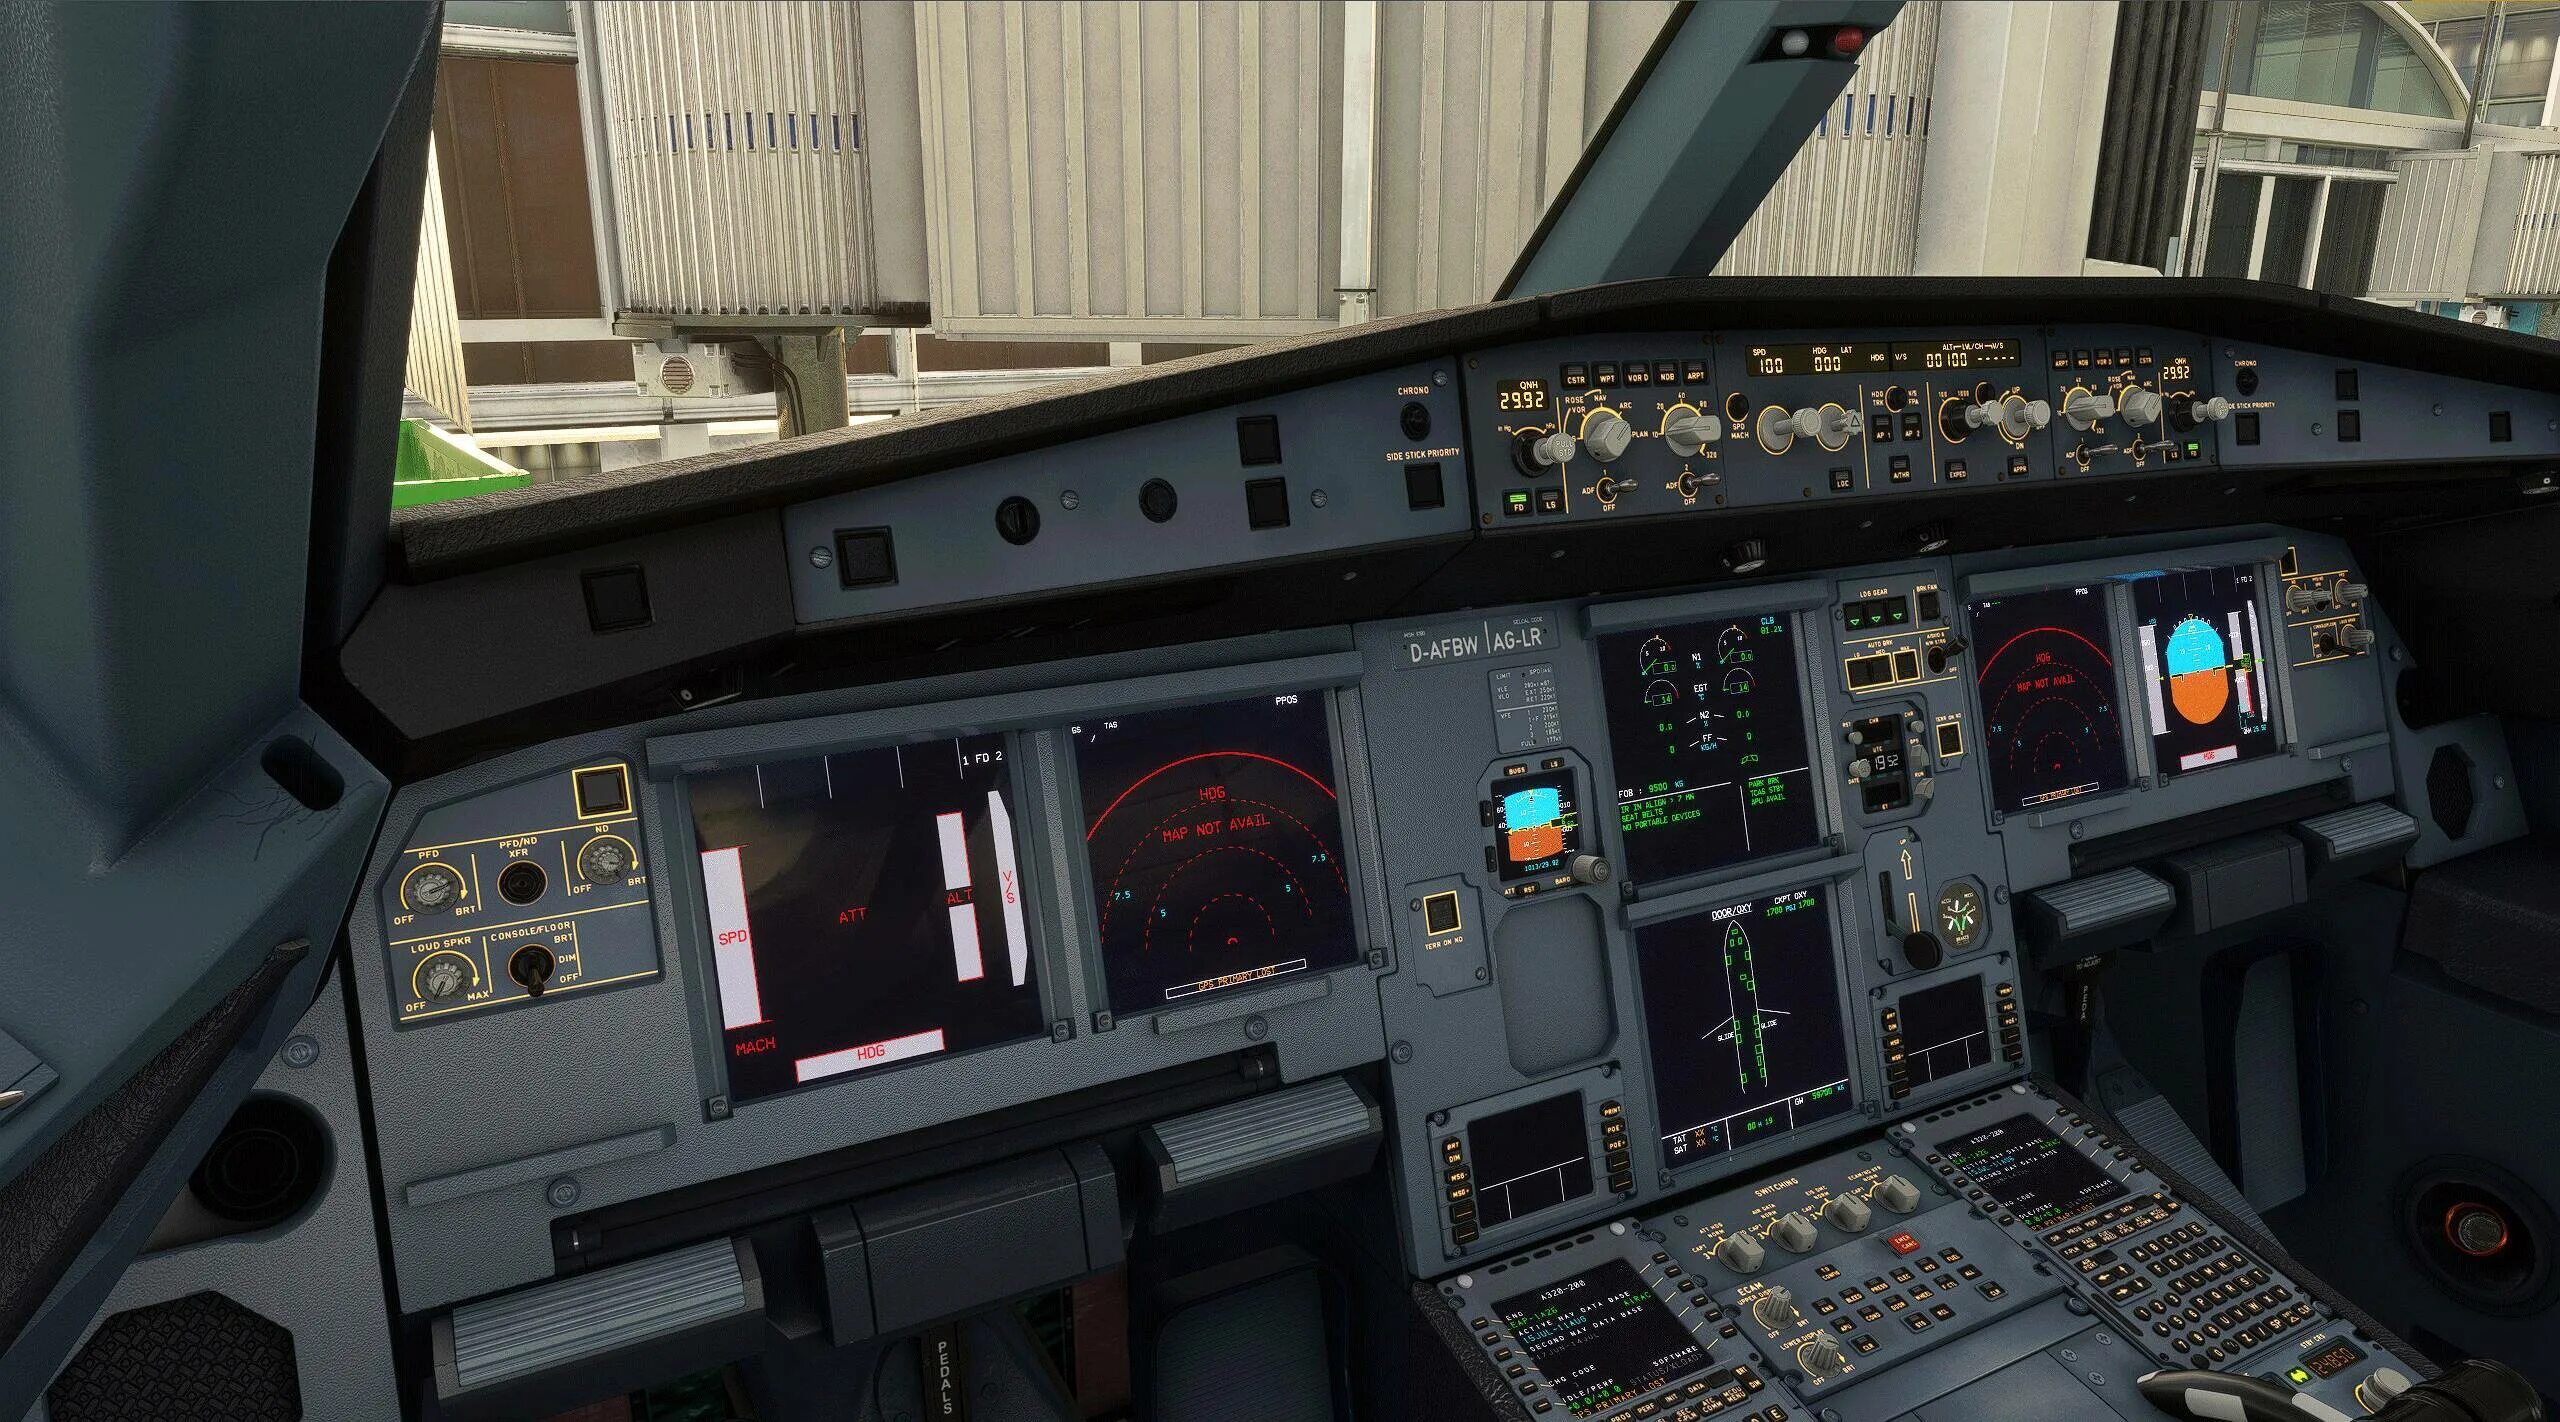 A32nx MSFS 2020. MSFS 2020 Cockpit a32nx. MSFS 2020 a320nx. Airbus a320neo Cockpit.